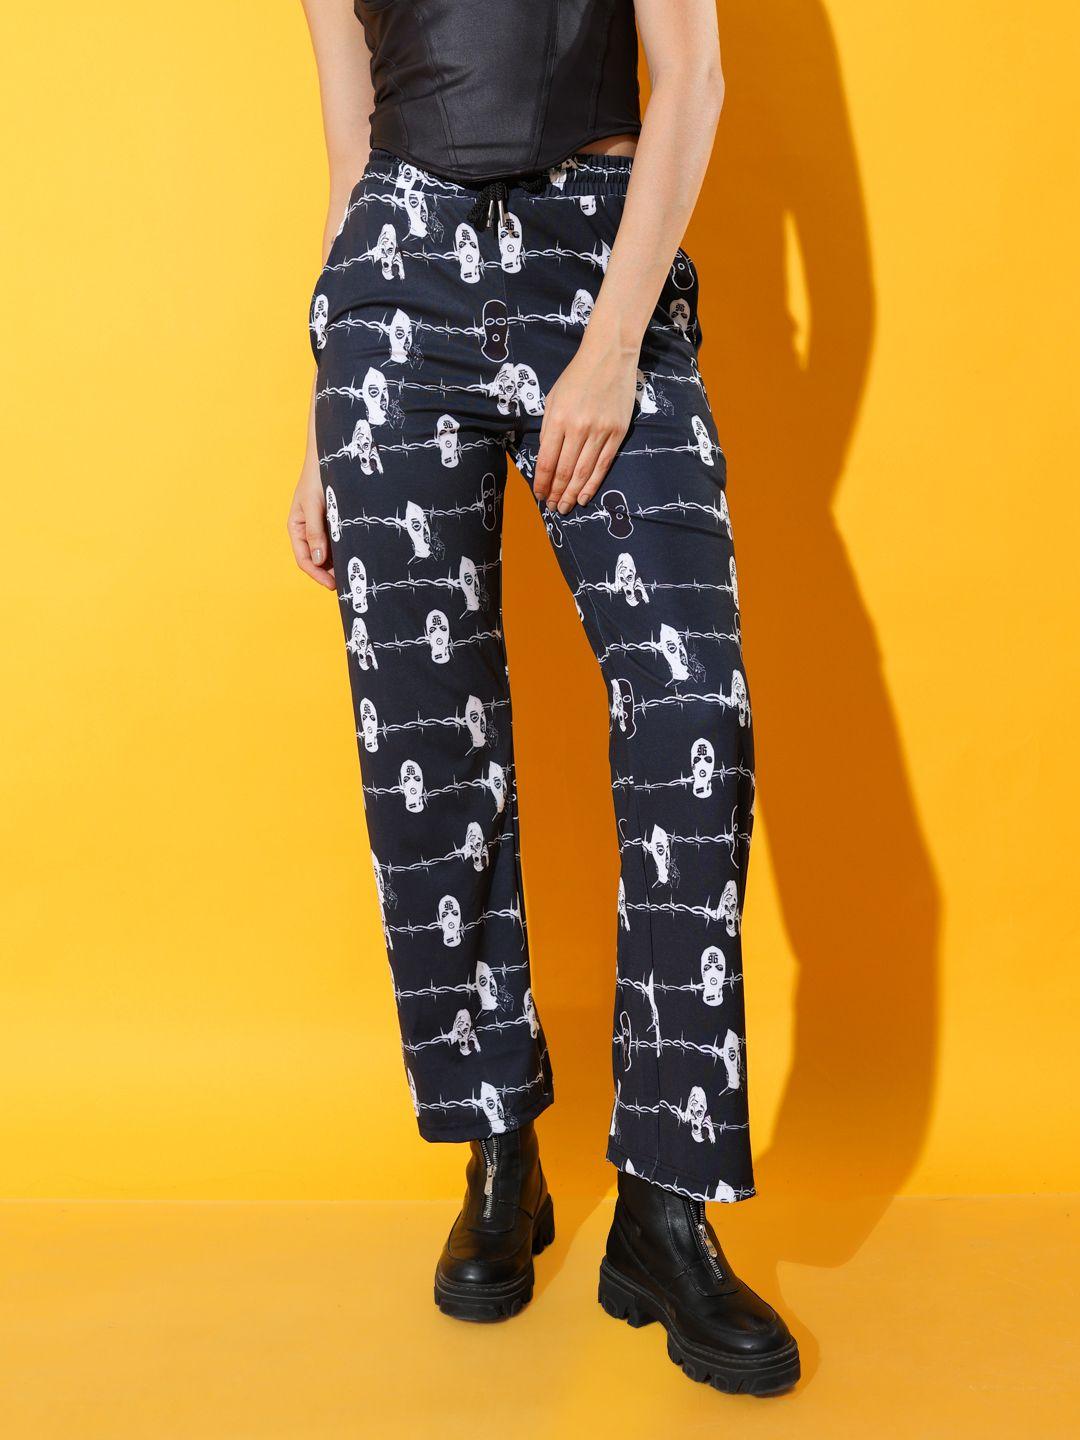 stylecast-x-hersheinbox-monochrome-printed-trousers